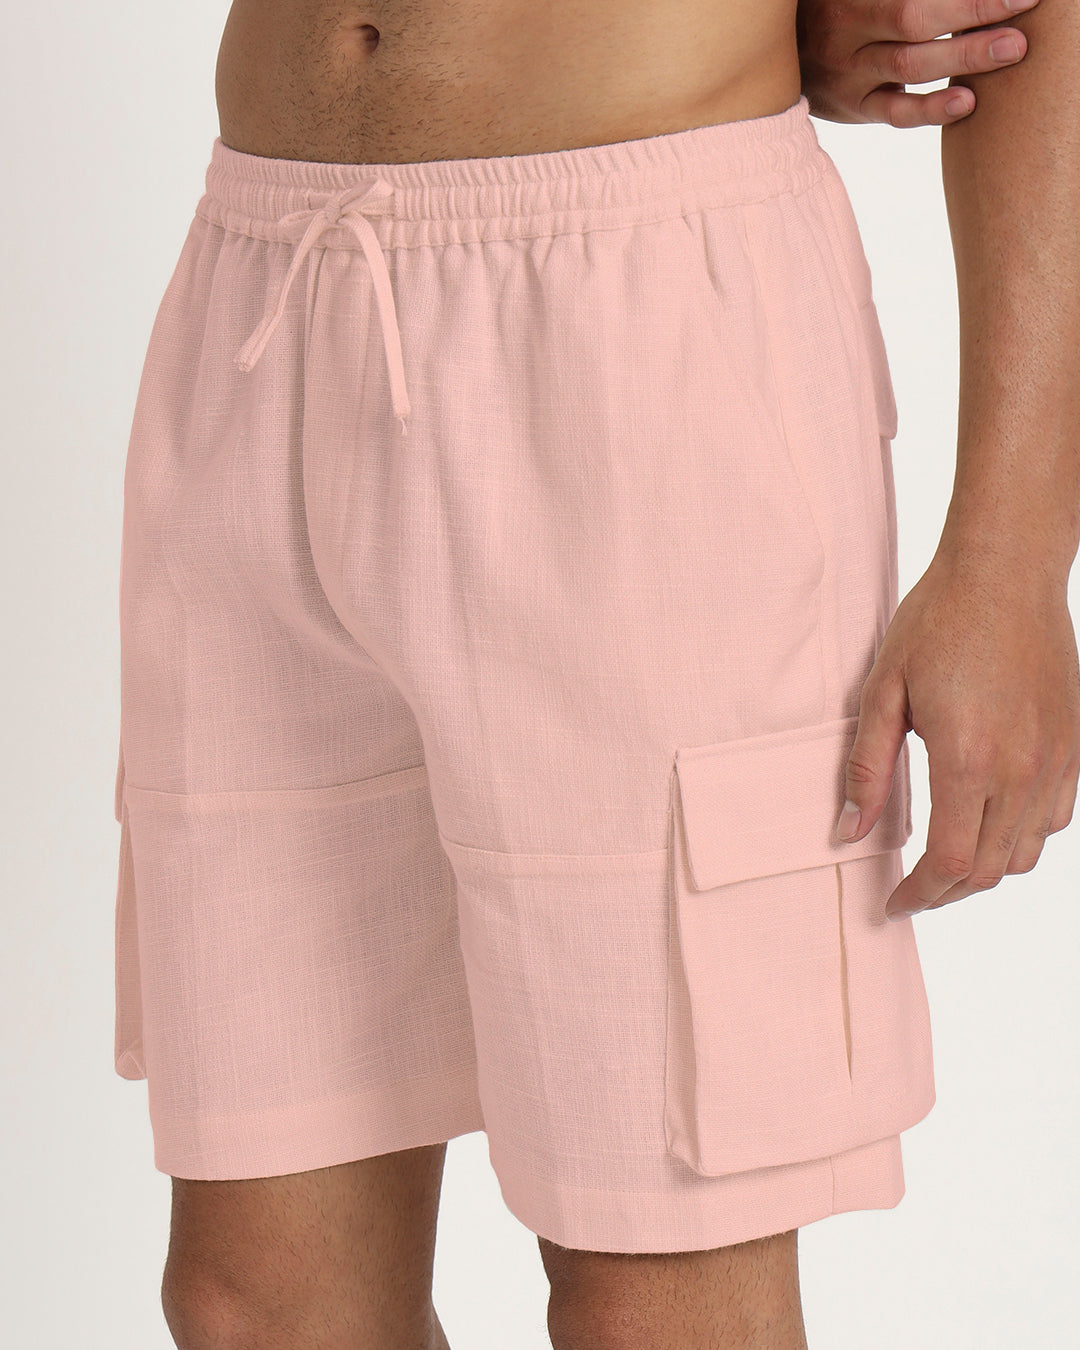 Combo : Comfy Ease & Cargo Fondant Pink Men's Pants & Shorts  - Set of 2